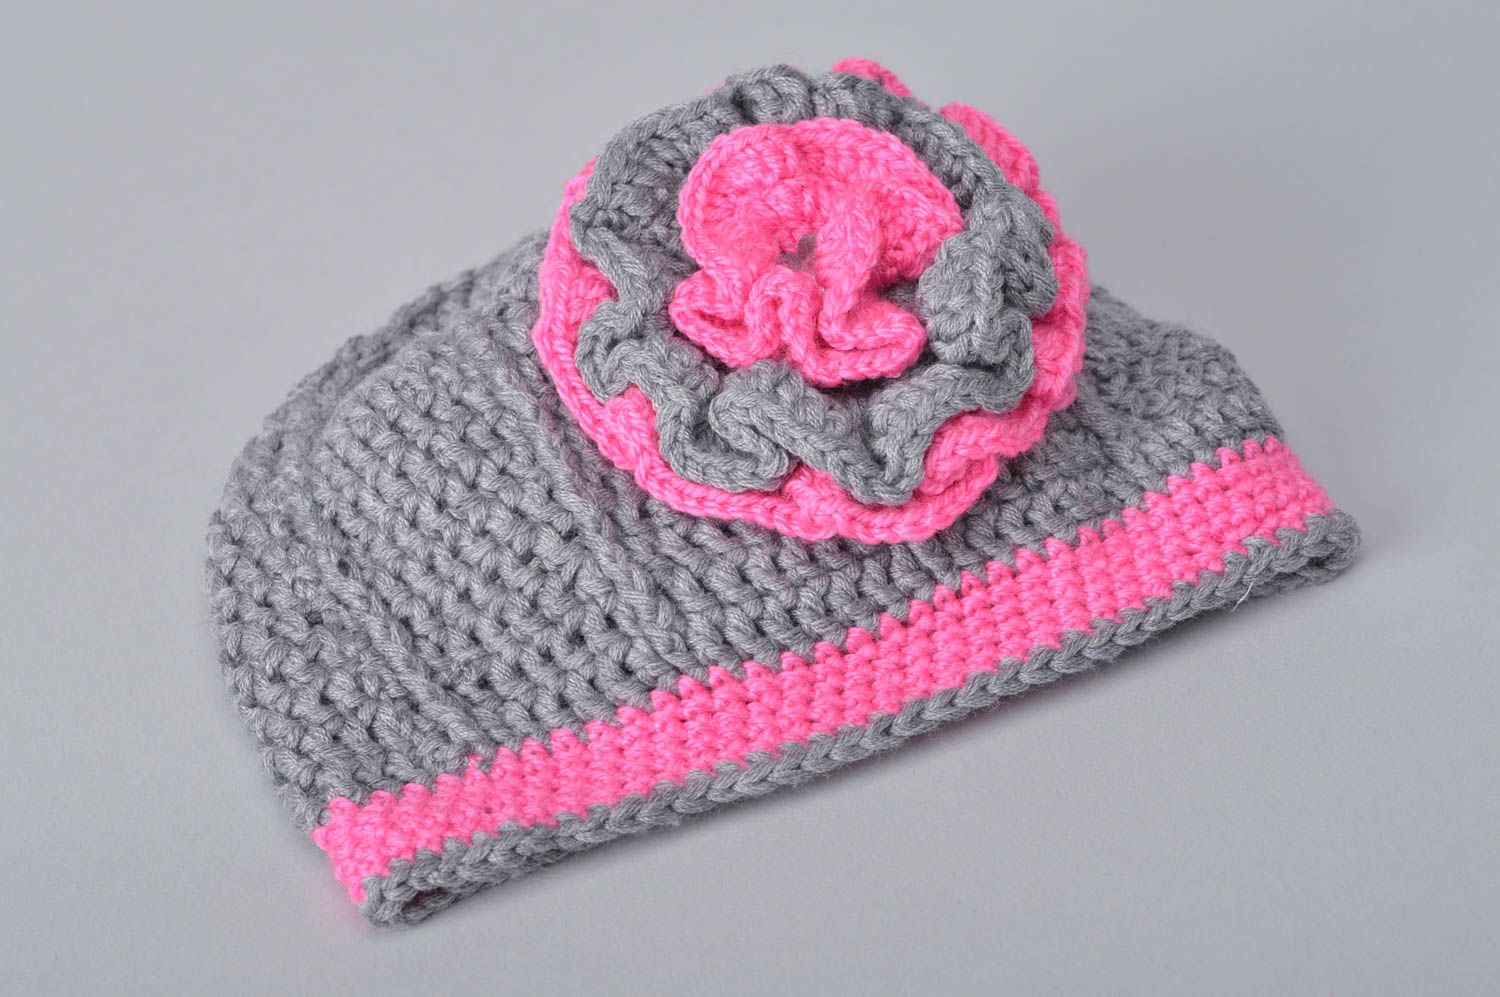 Handmade crochet baby hat kids winter hats kids accessories gifts for children photo 7